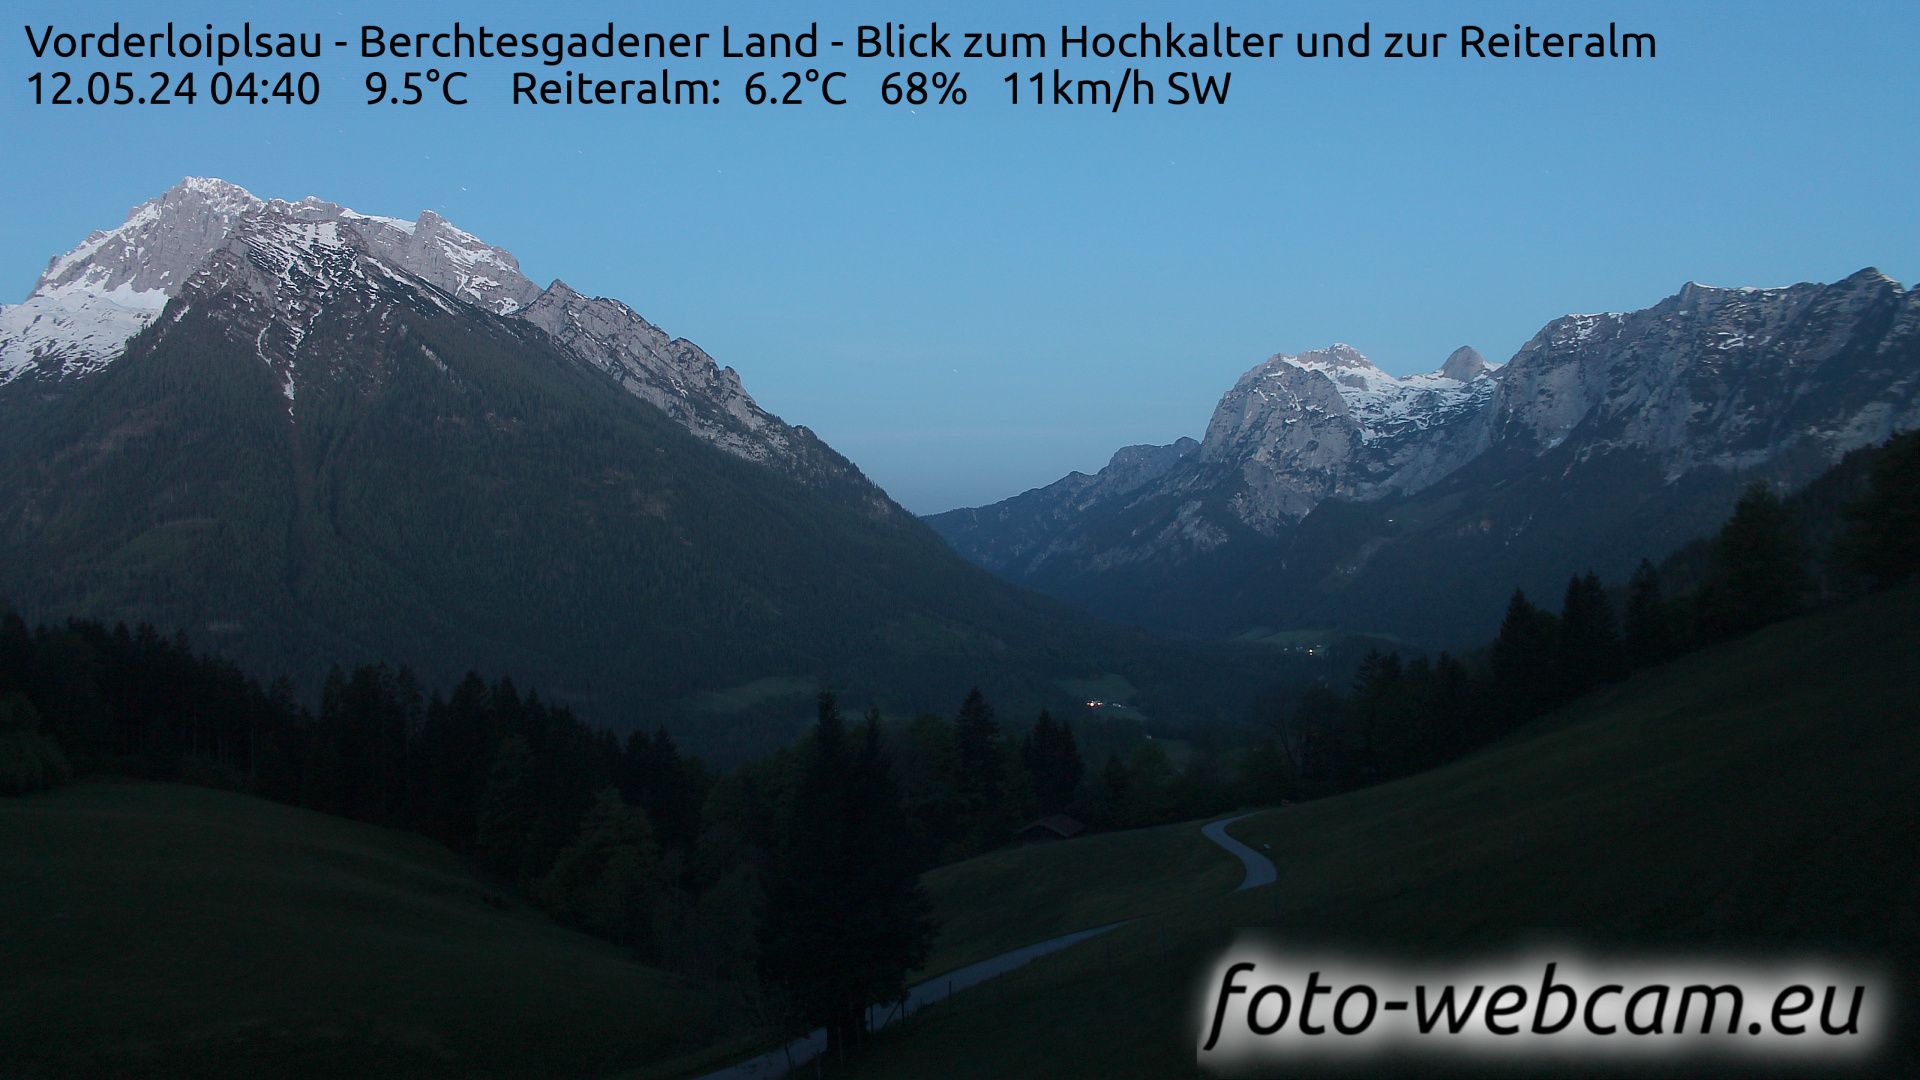 Ramsau bei Berchtesgaden Jue. 04:48